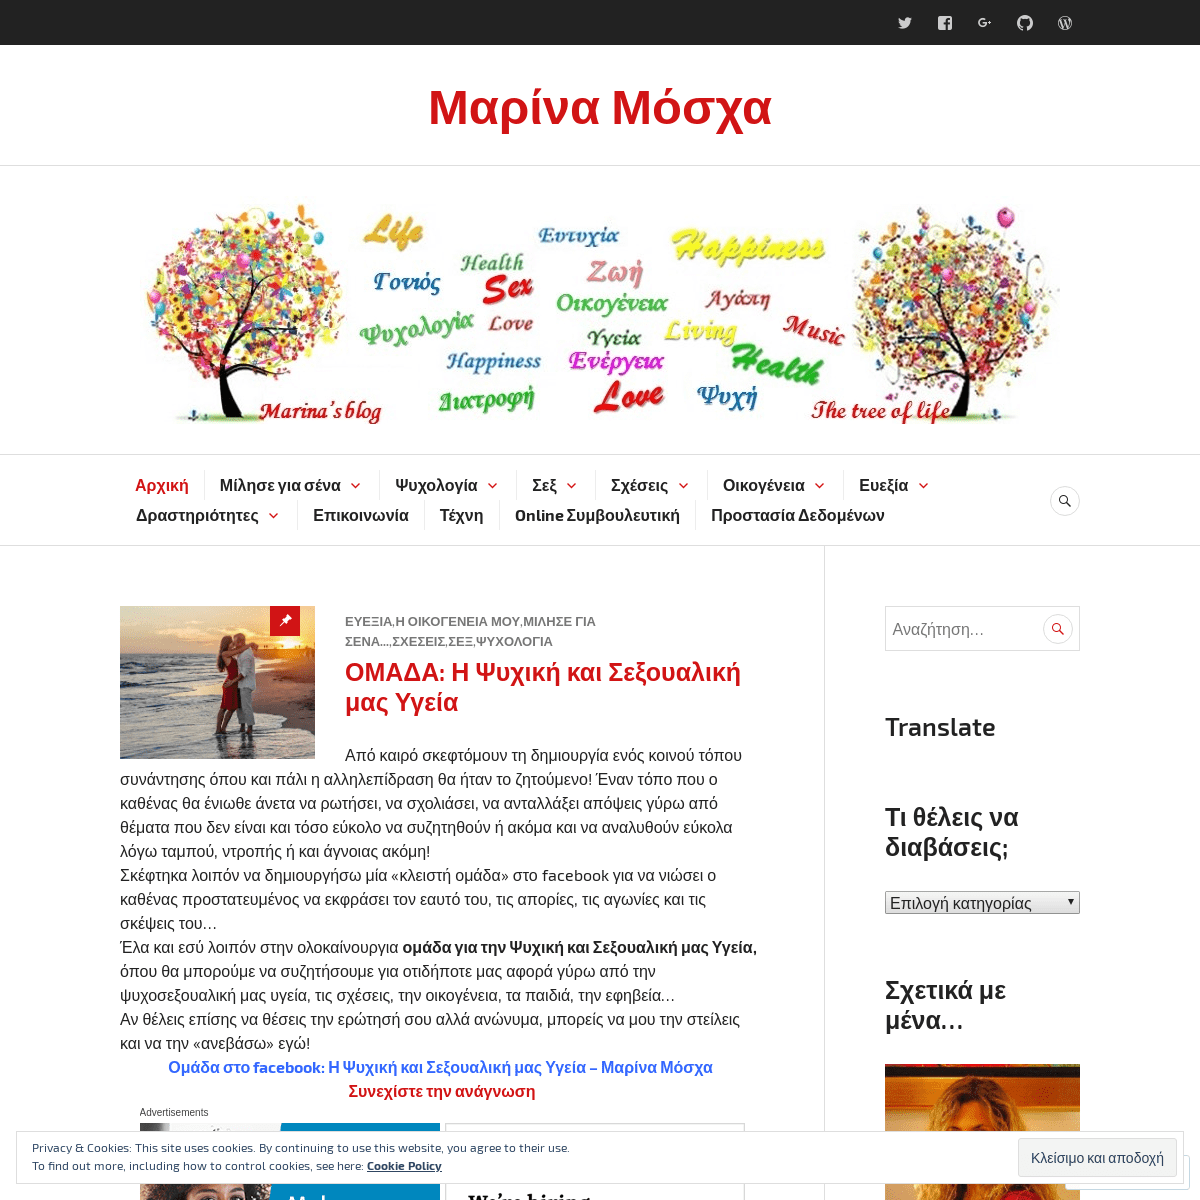 A complete backup of marinamoscha.wordpress.com